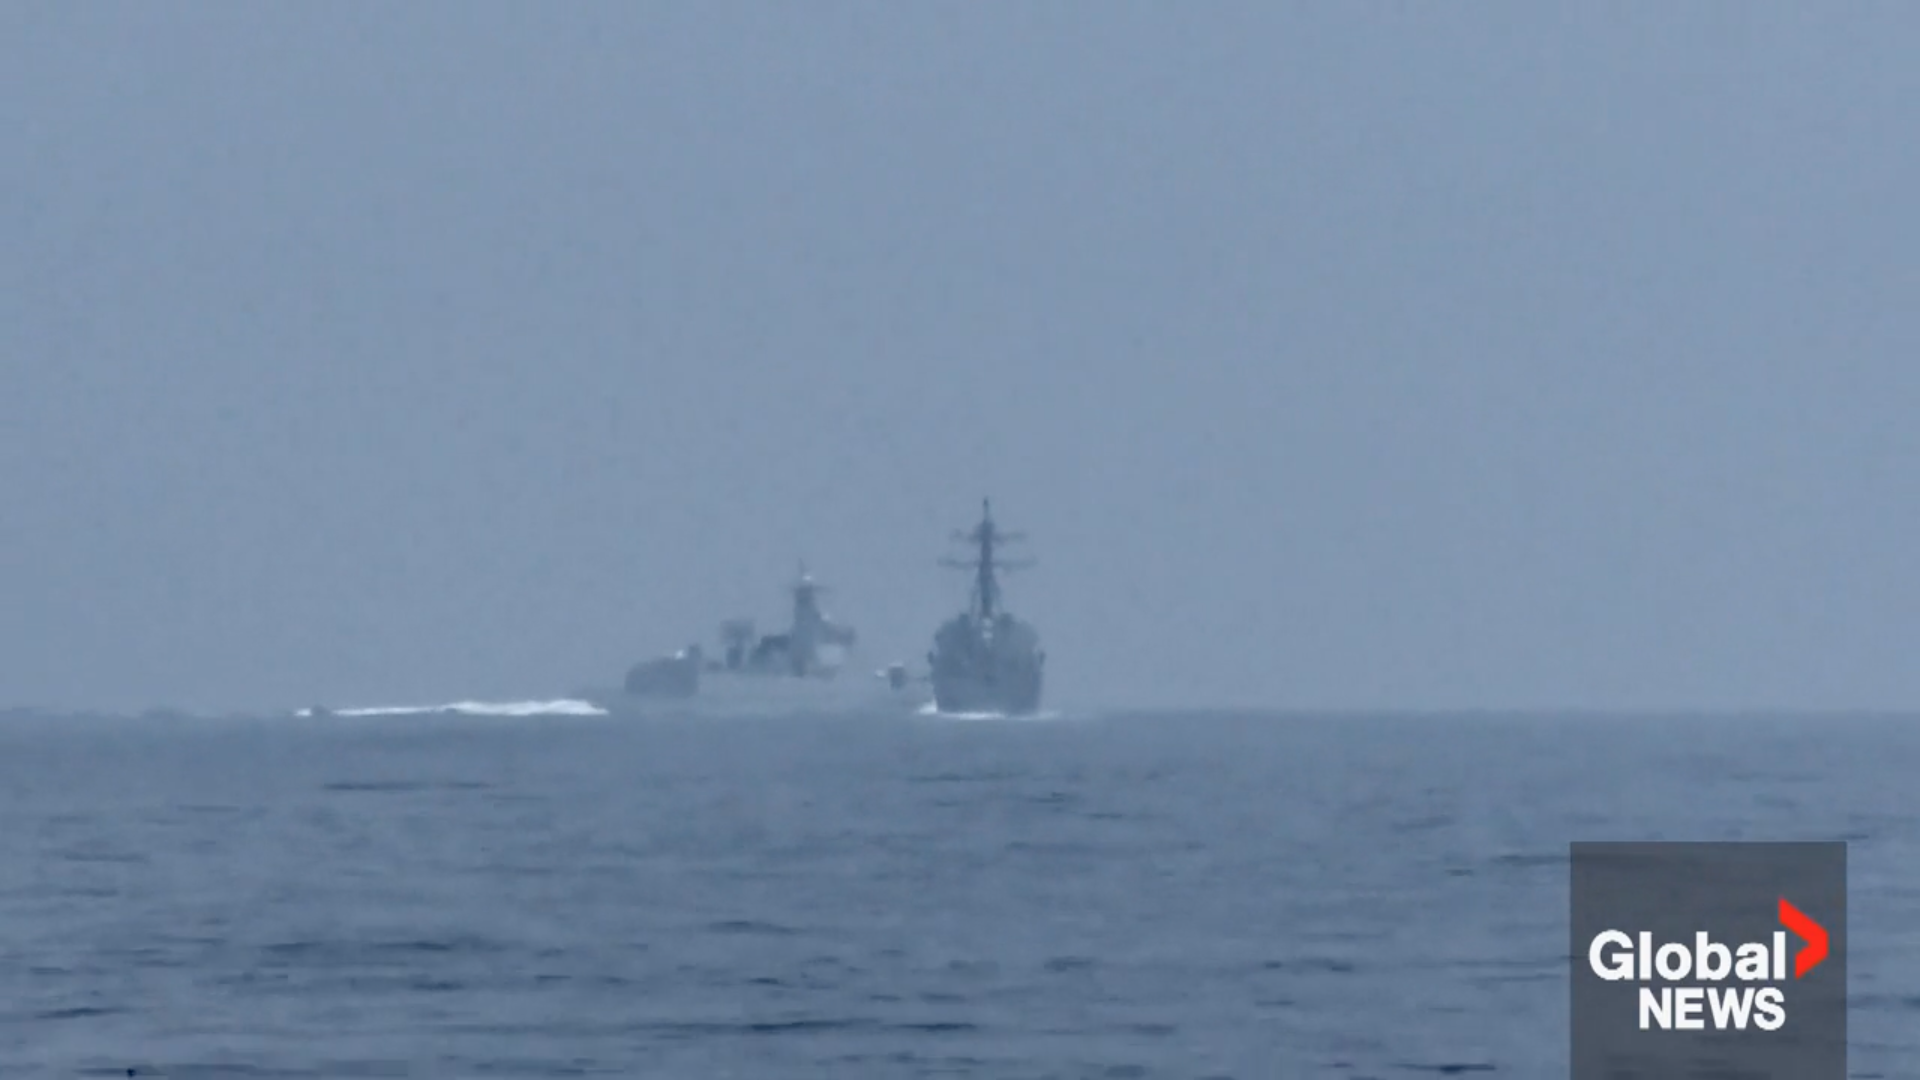 China acusa a Estados Unidos de provocación tras casi colisión de buques de guerra